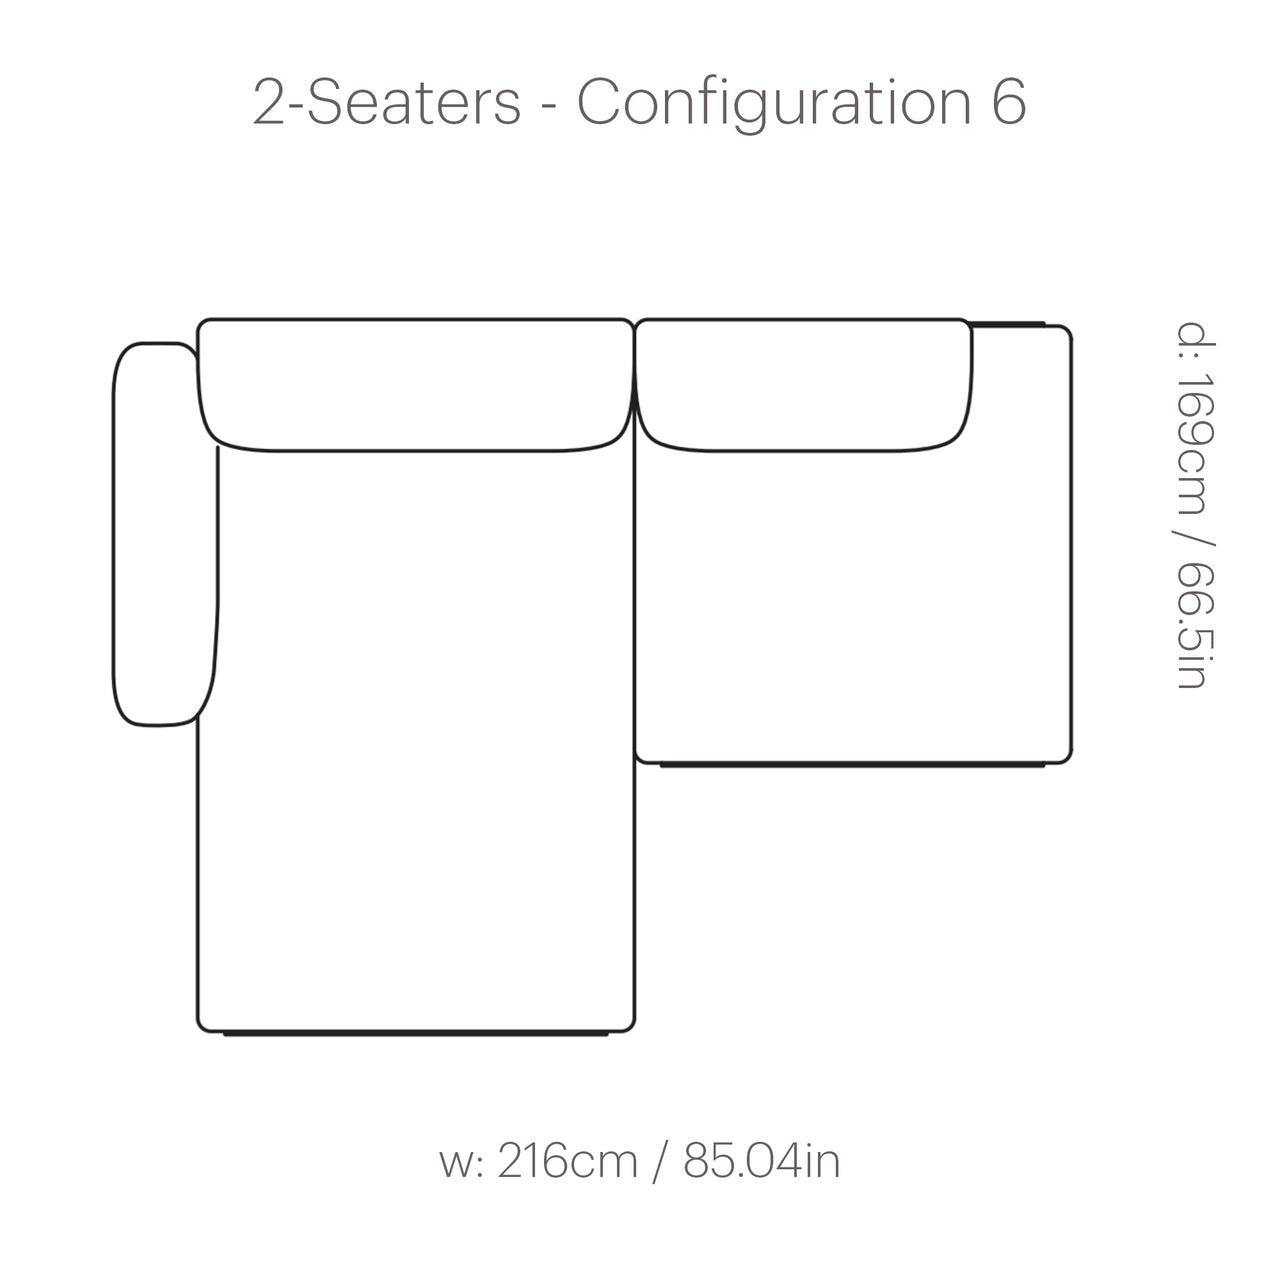 In Situ Modular Sofa: 2 Seater + Configuration 6